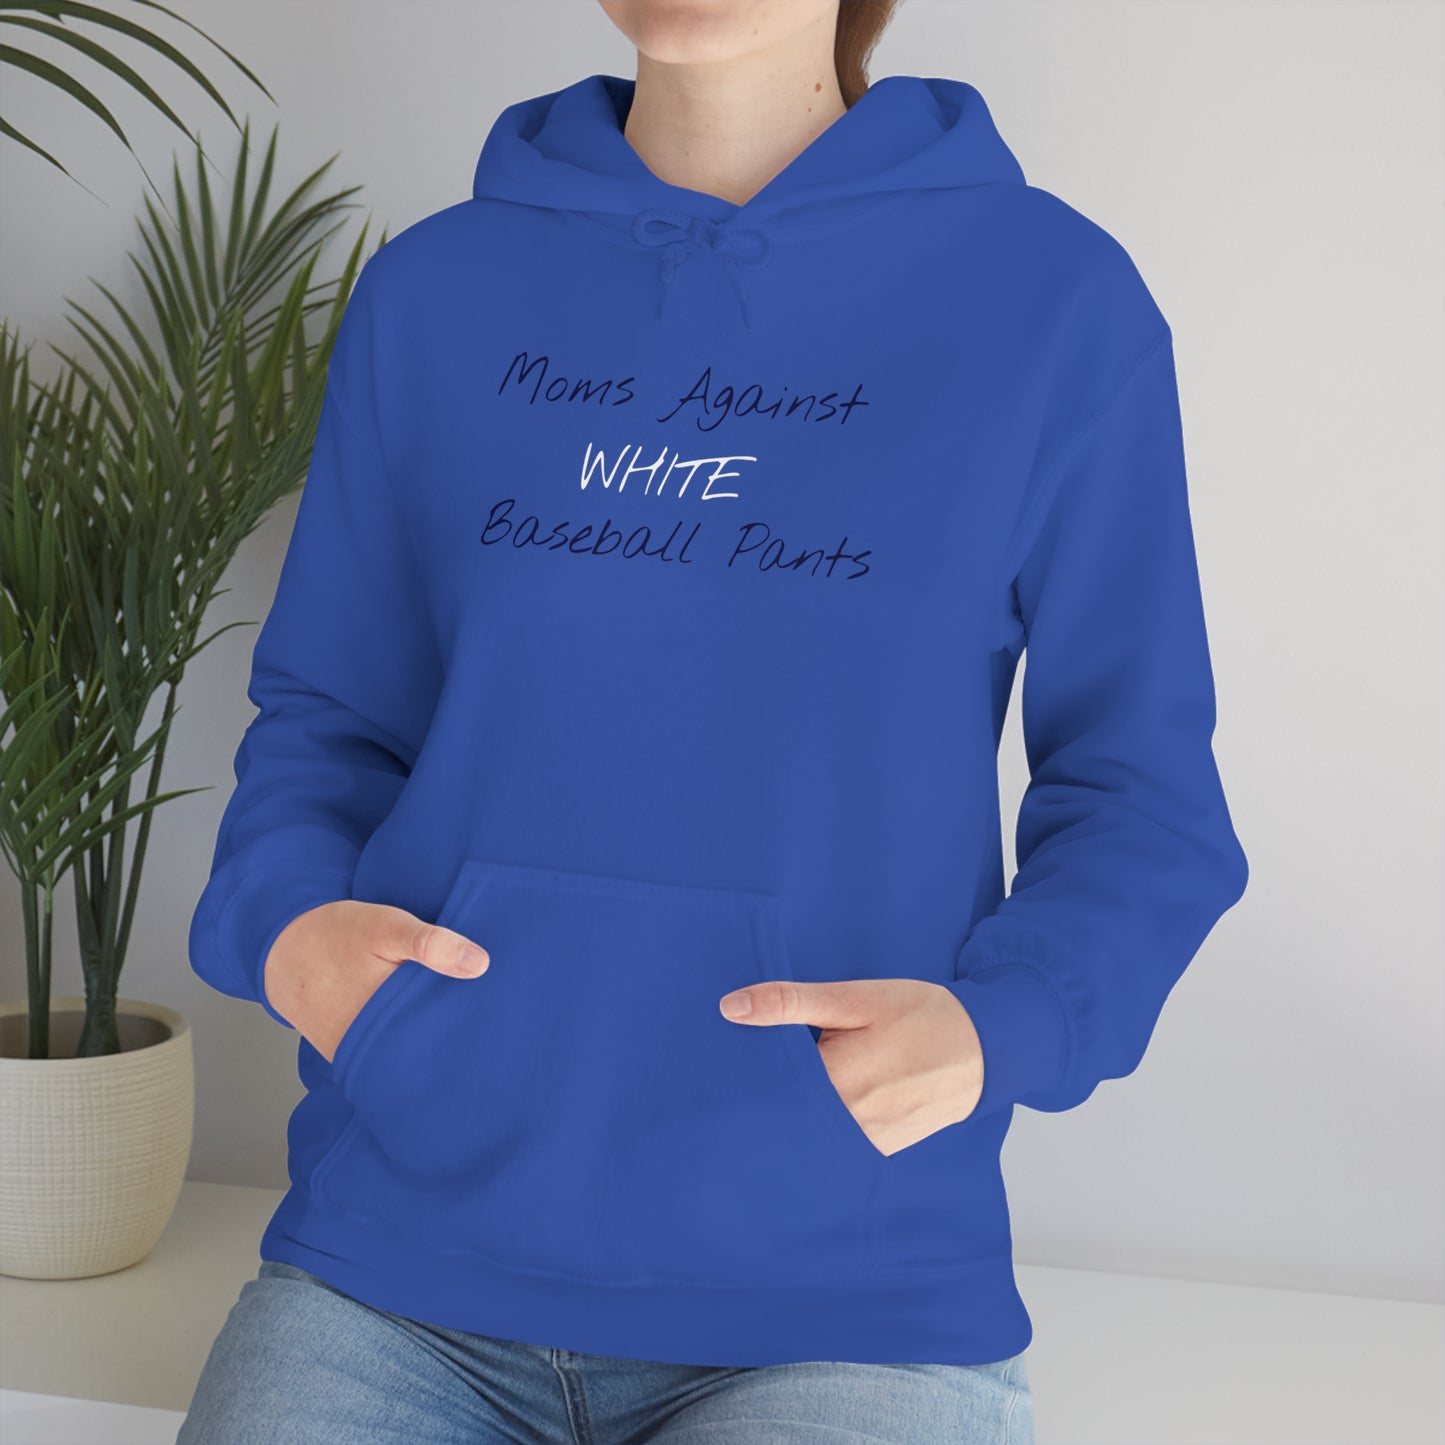 "Moms Against White Baseball Pants" Hooded Sweatshirt